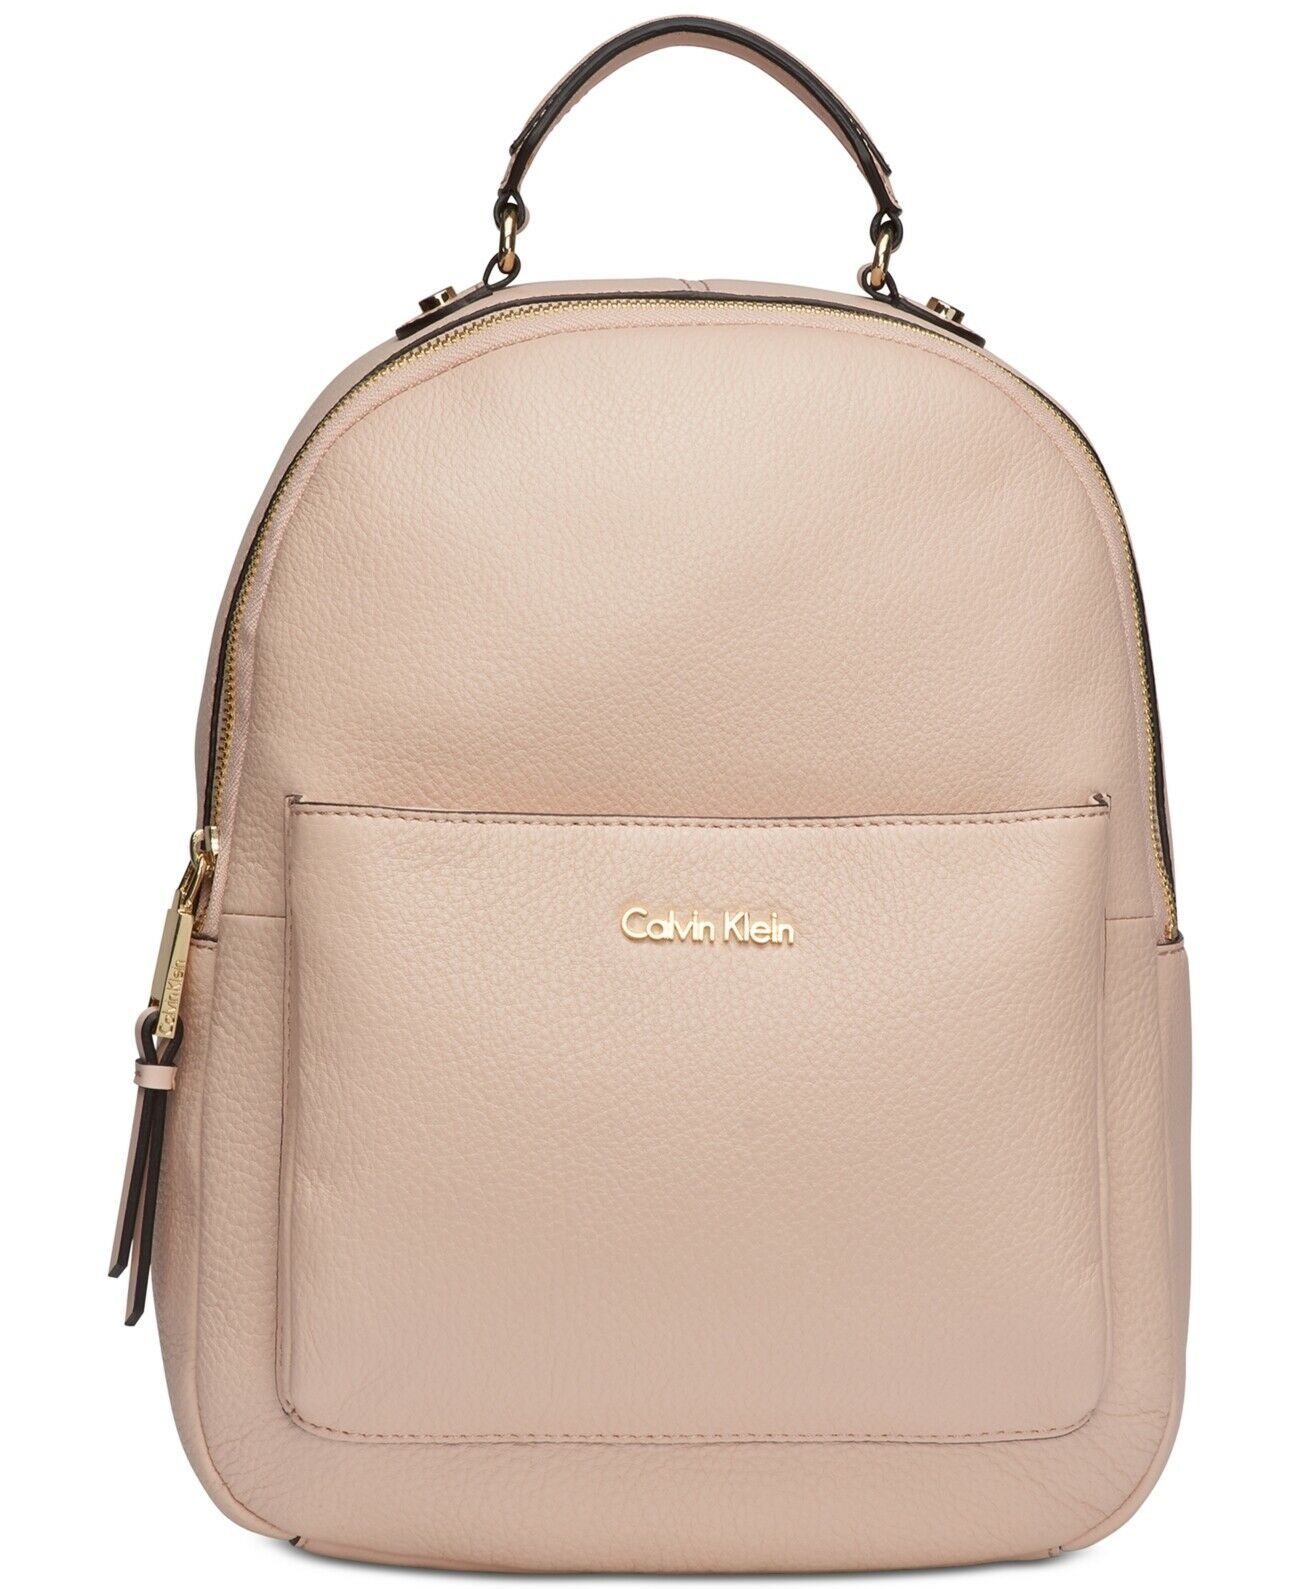 calvin klein lianna backpack